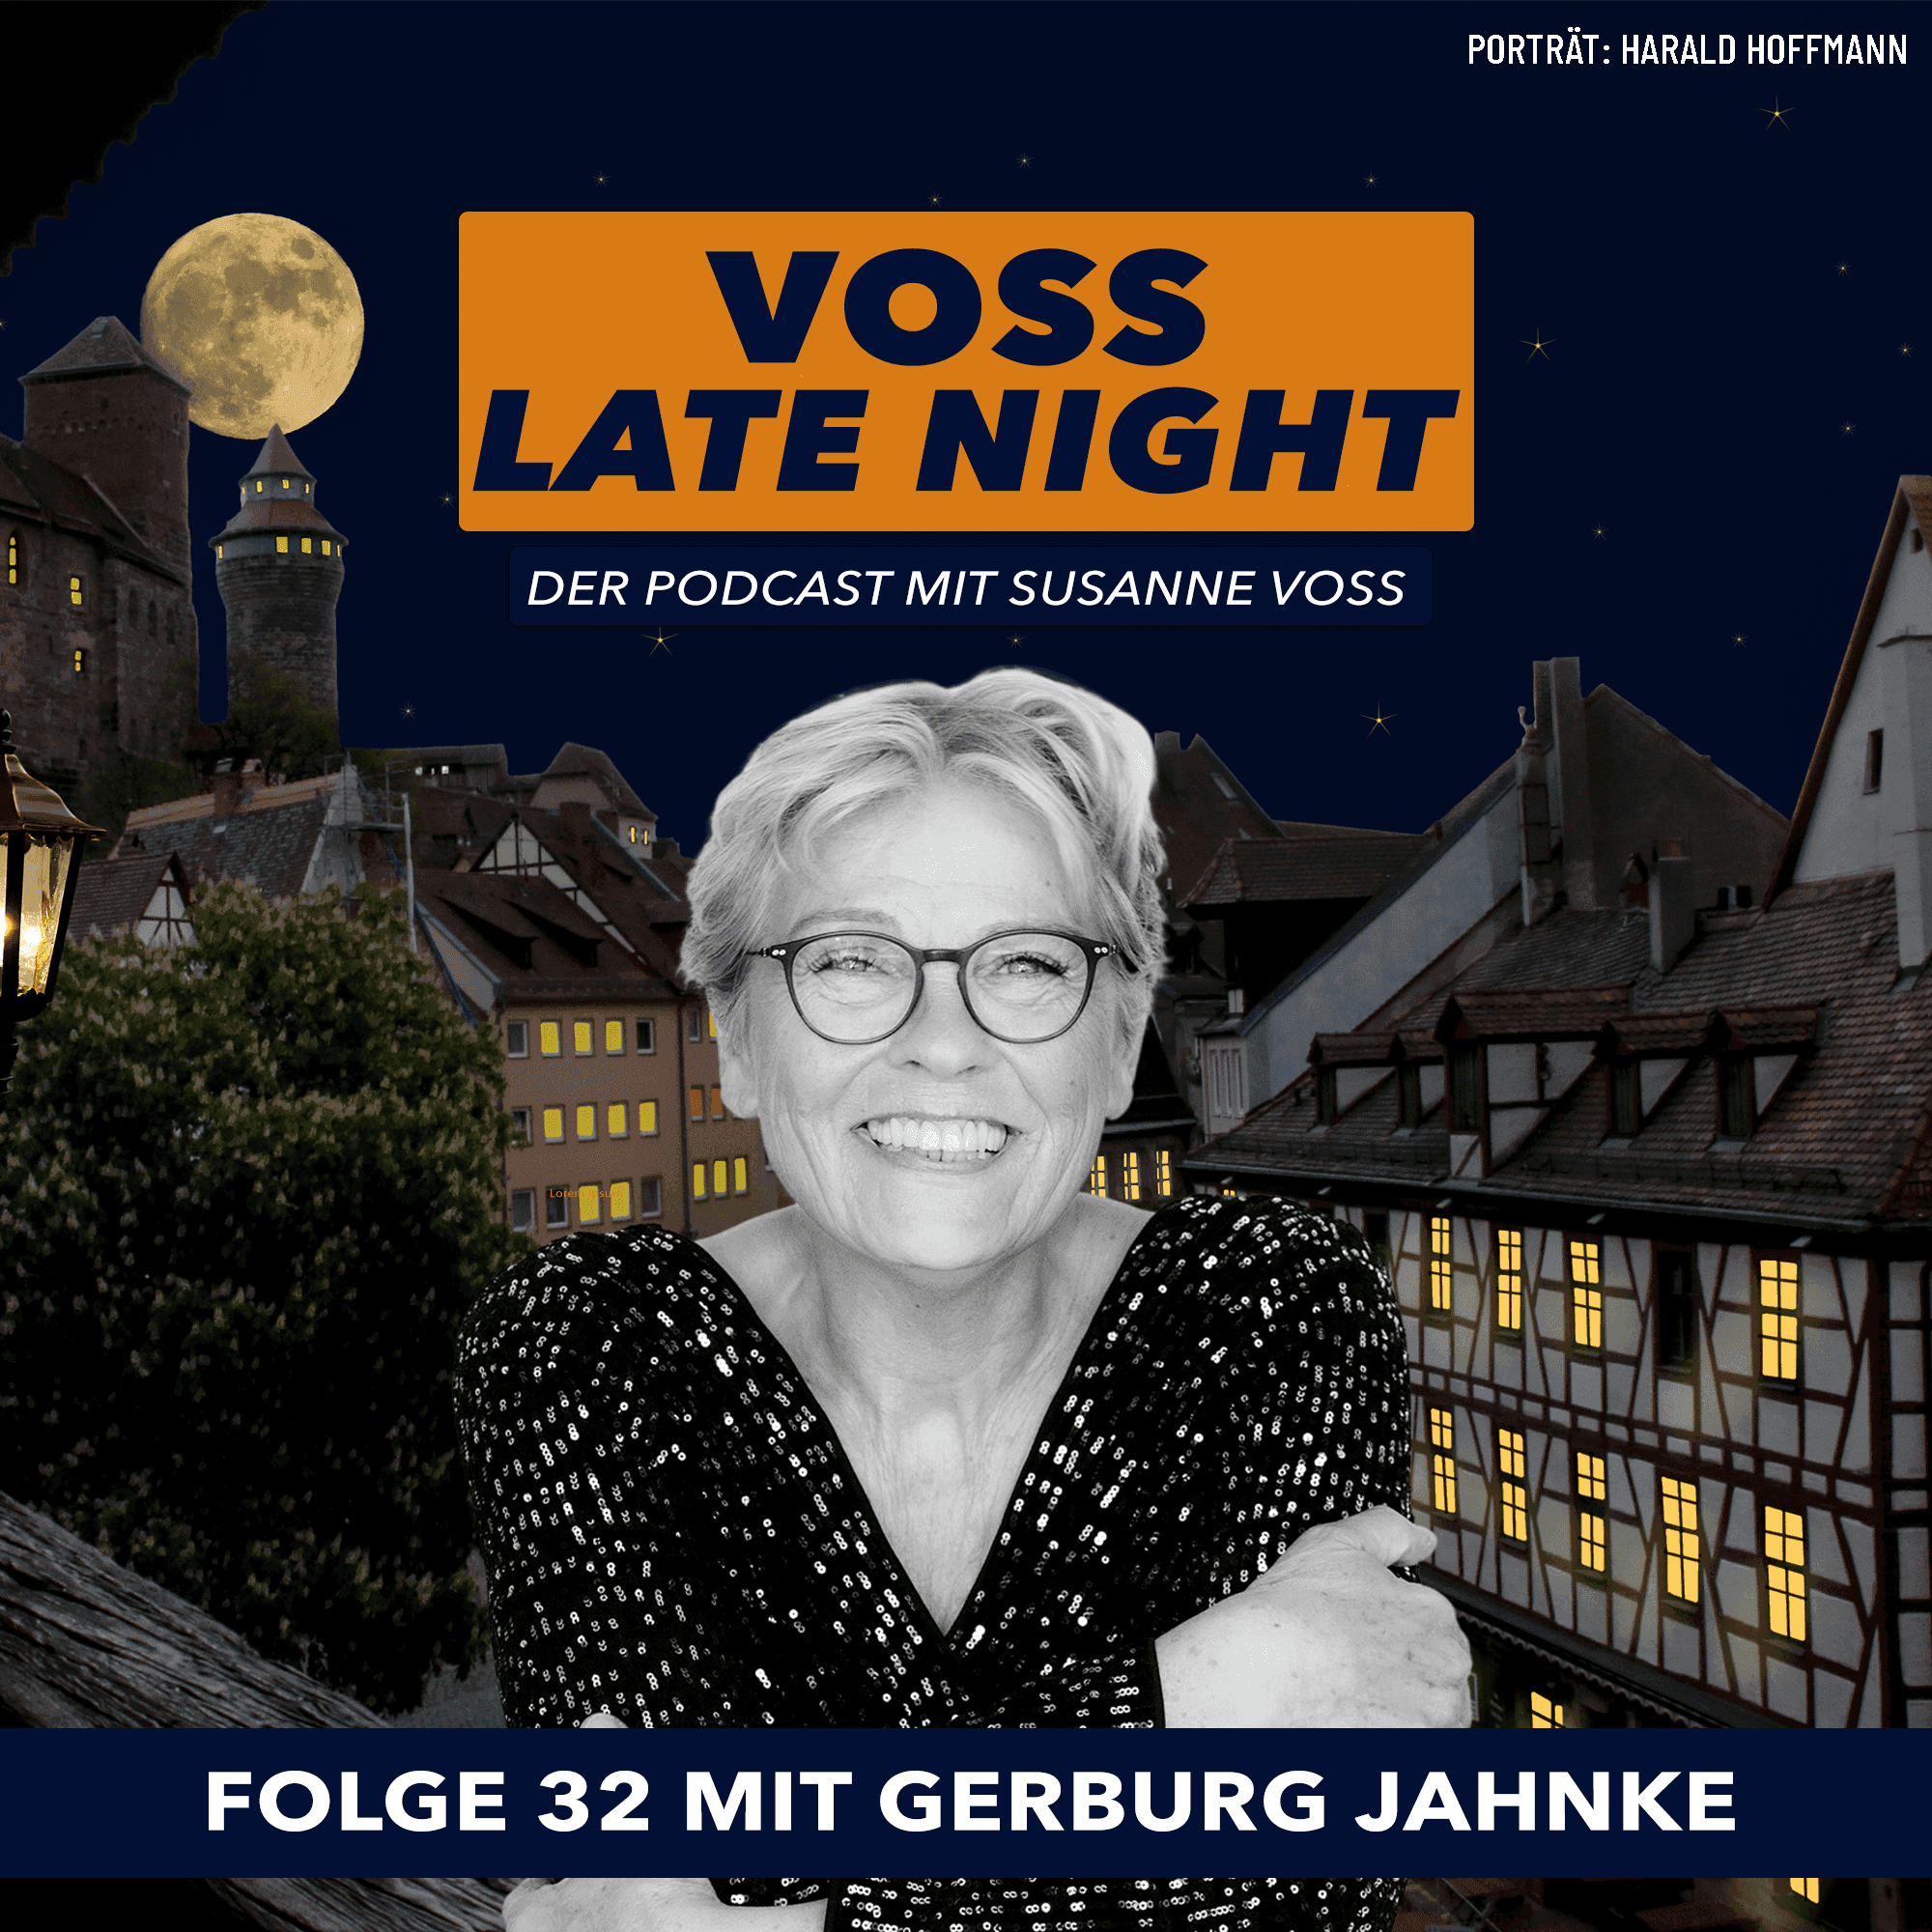 VOSS LATE NIGHT – Folge 32 mit Kabarettistin Gerburg Jahnke